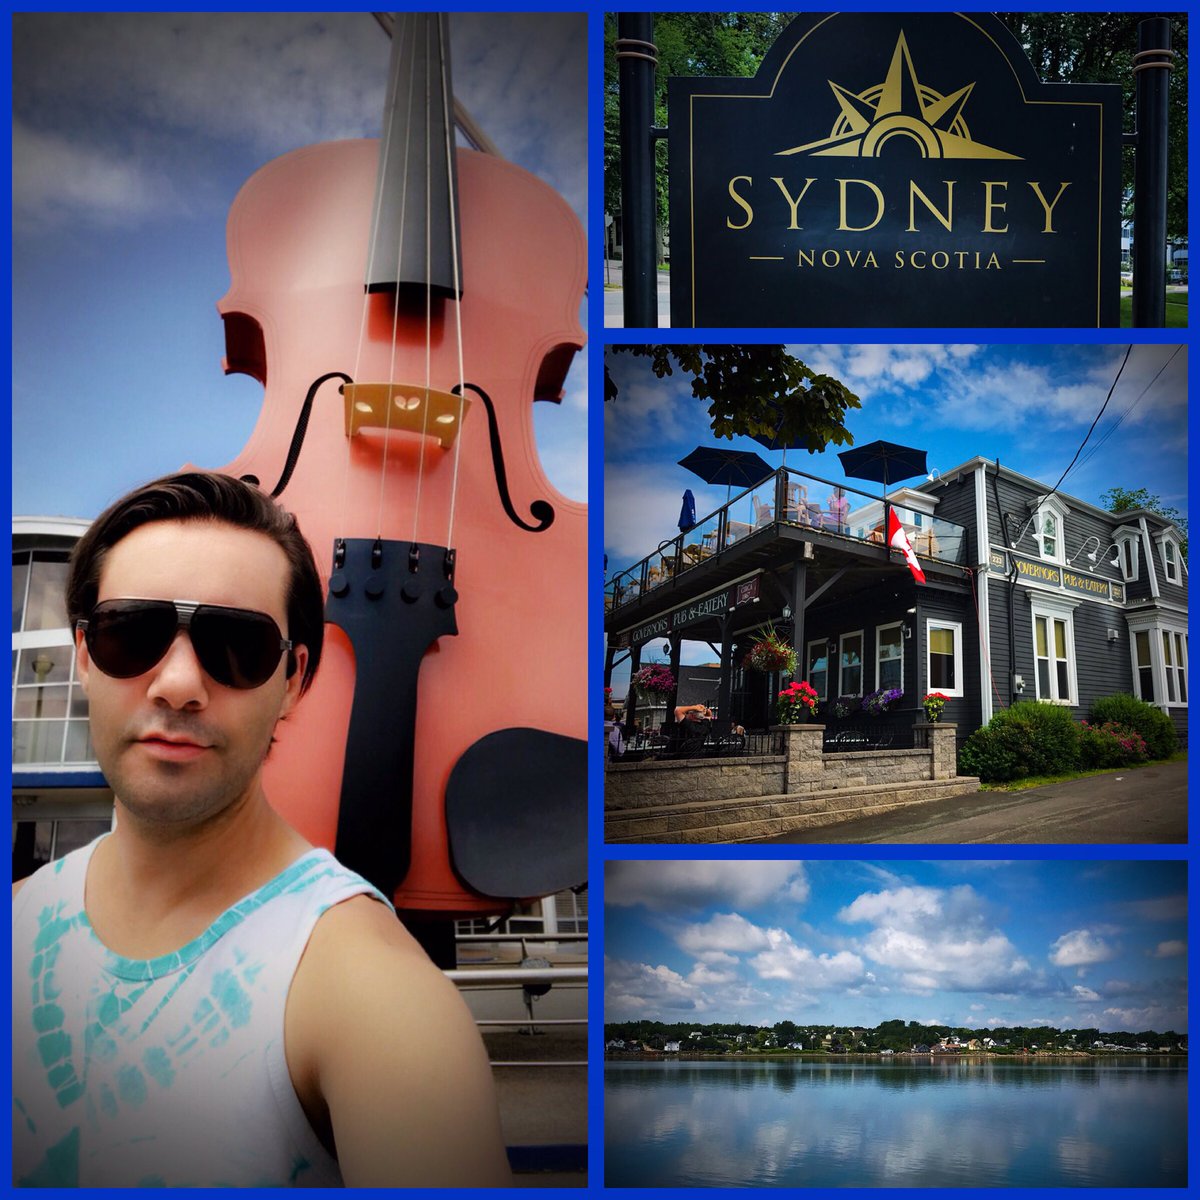 Beautiful #Sydney #CapeBretonIsland #NovaScotia 🇨🇦
#Travel #Traveling #Atlantic #CapeBreton #BigFiddle #EastCoast #MaritimeProvince